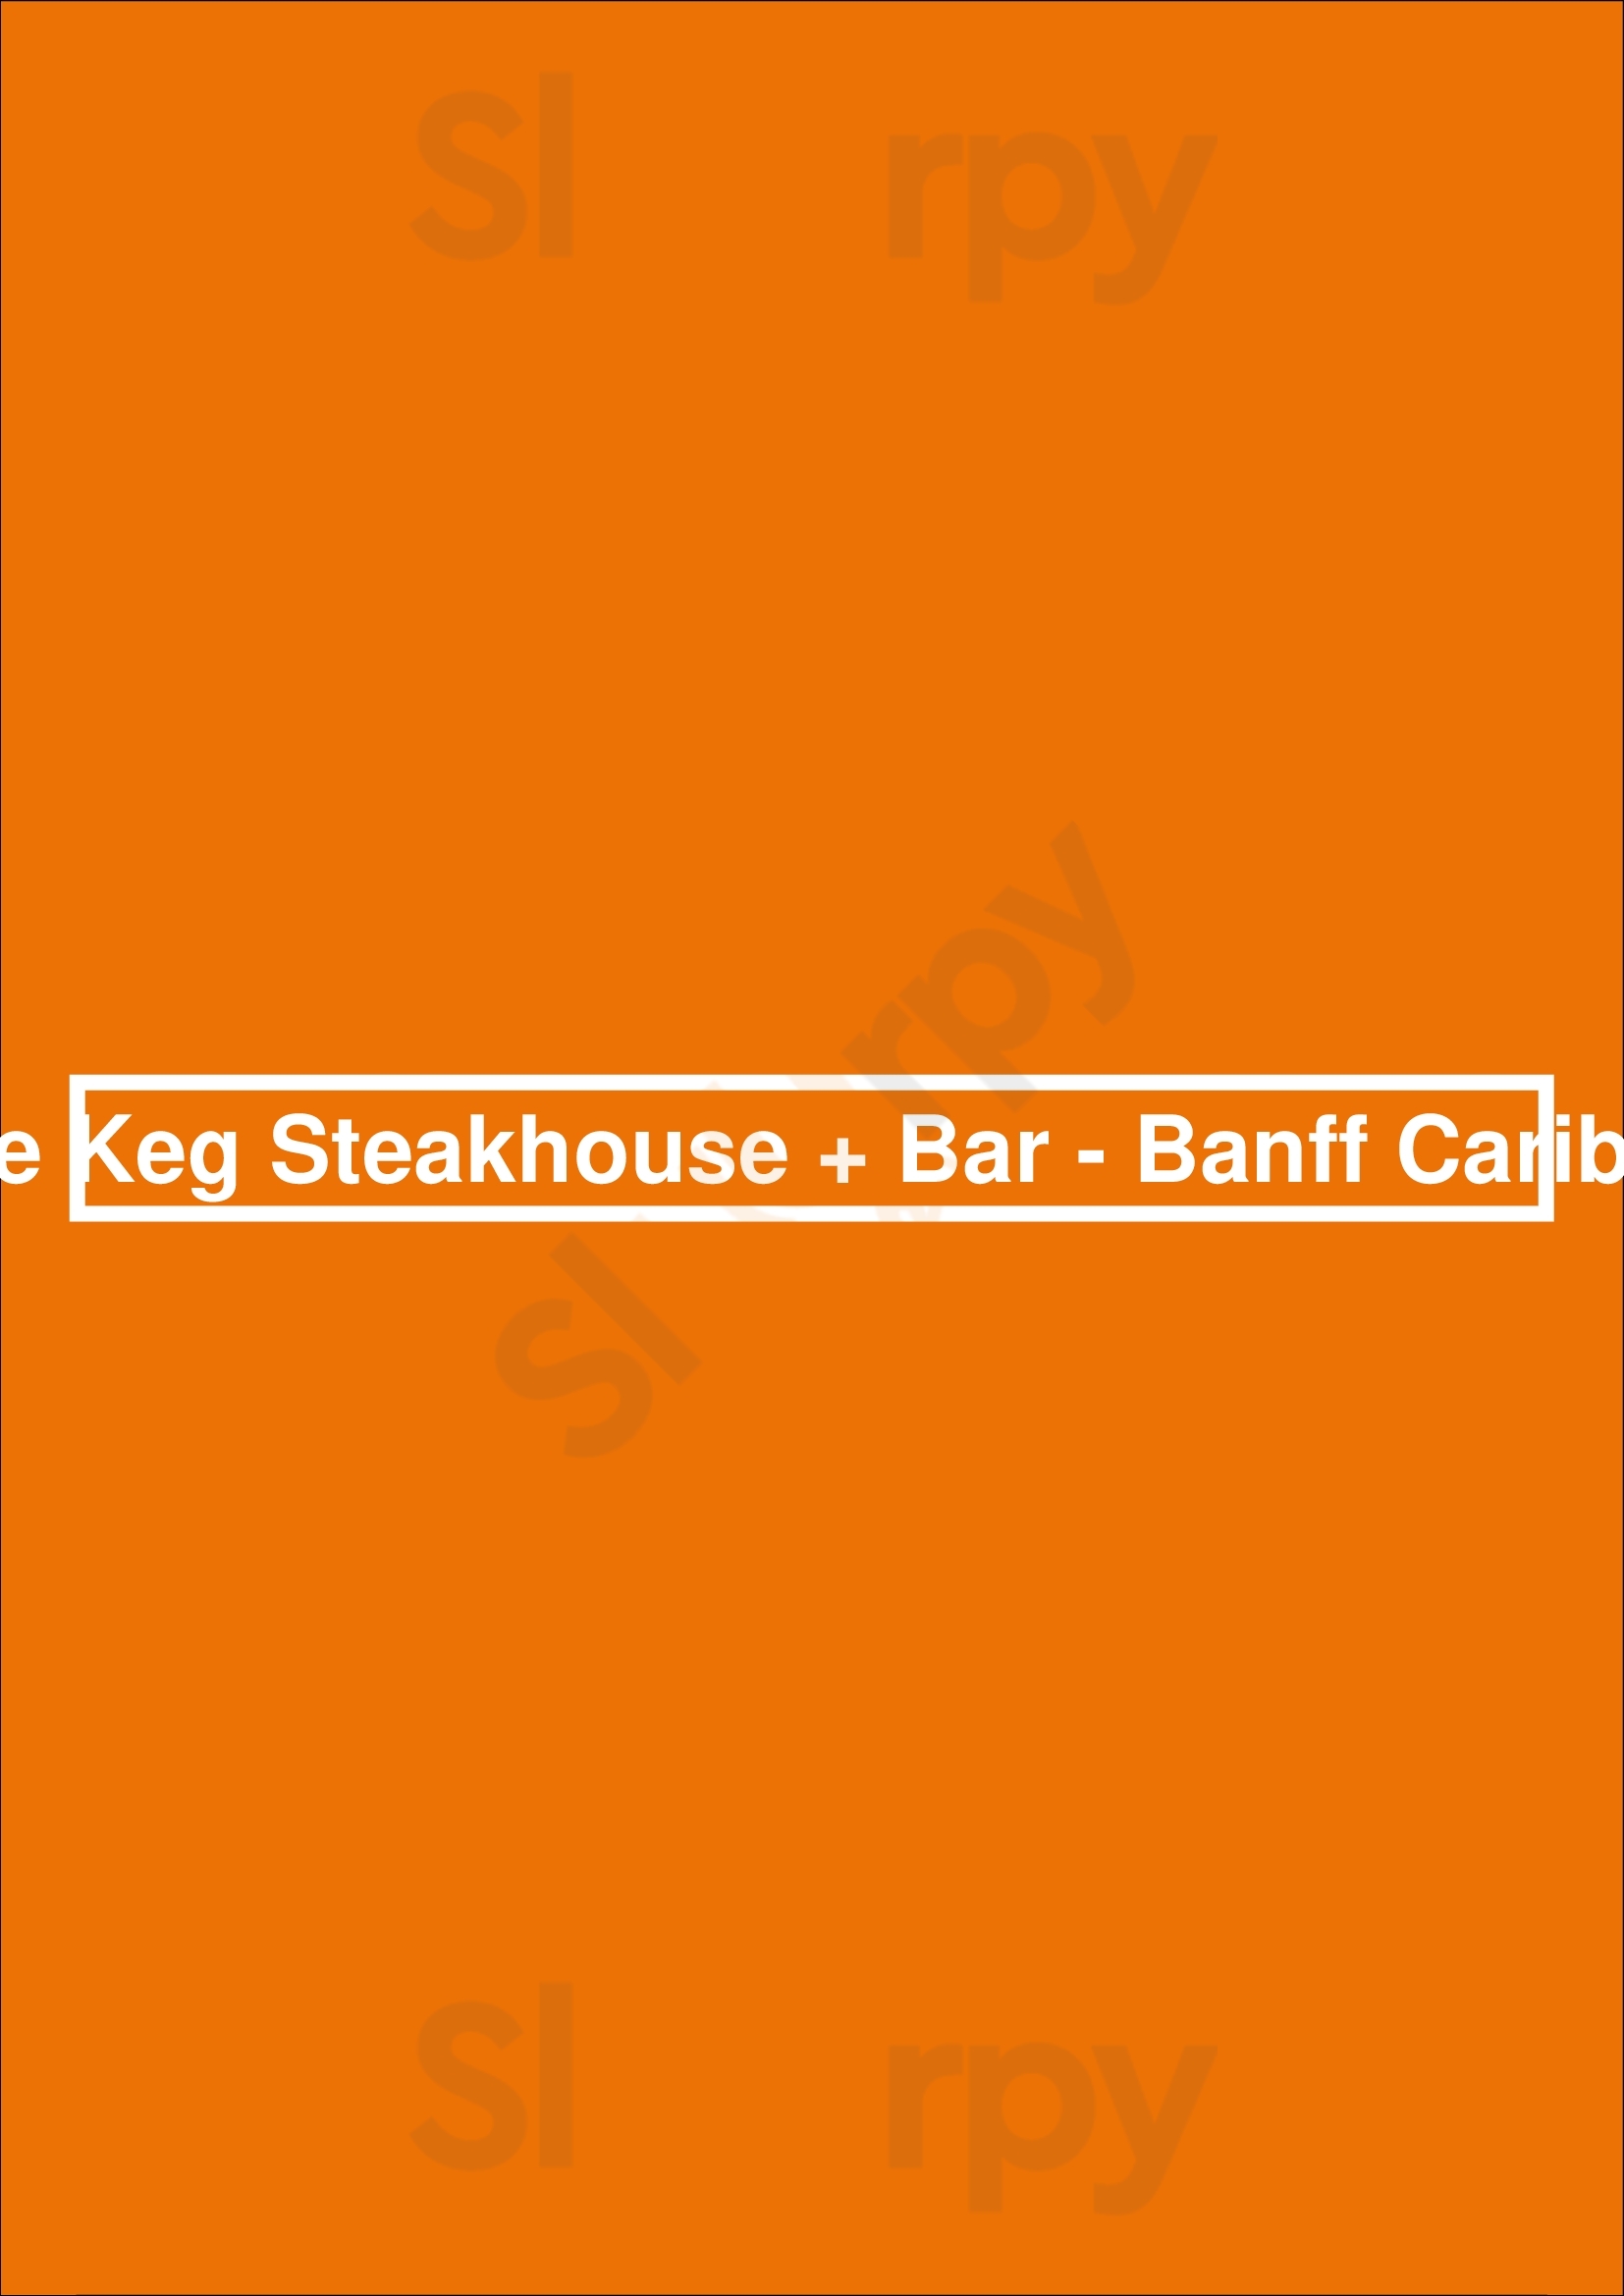 The Keg Steakhouse + Bar - Banff Caribou Banff Menu - 1